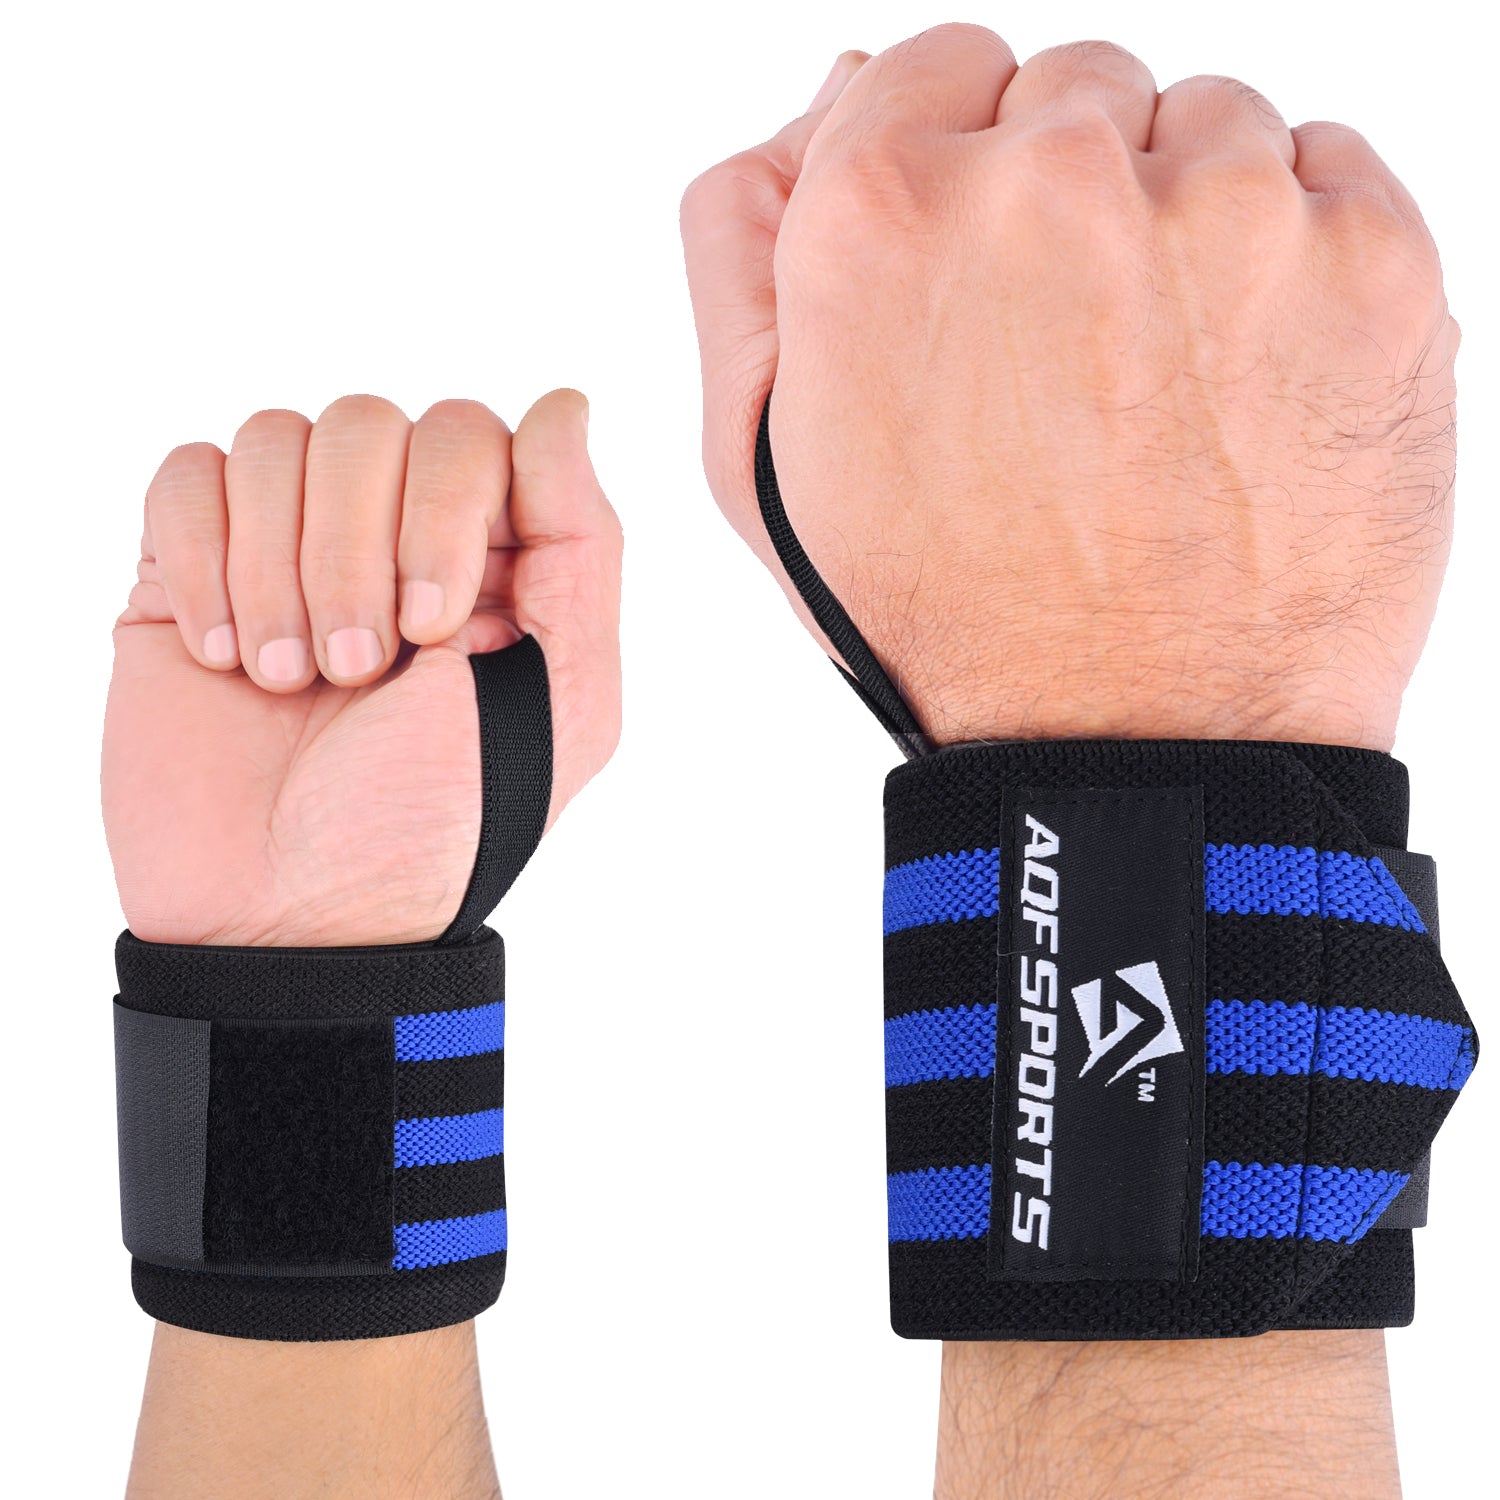  Blue and black stripped  Wrist Wraps - AQF Sports